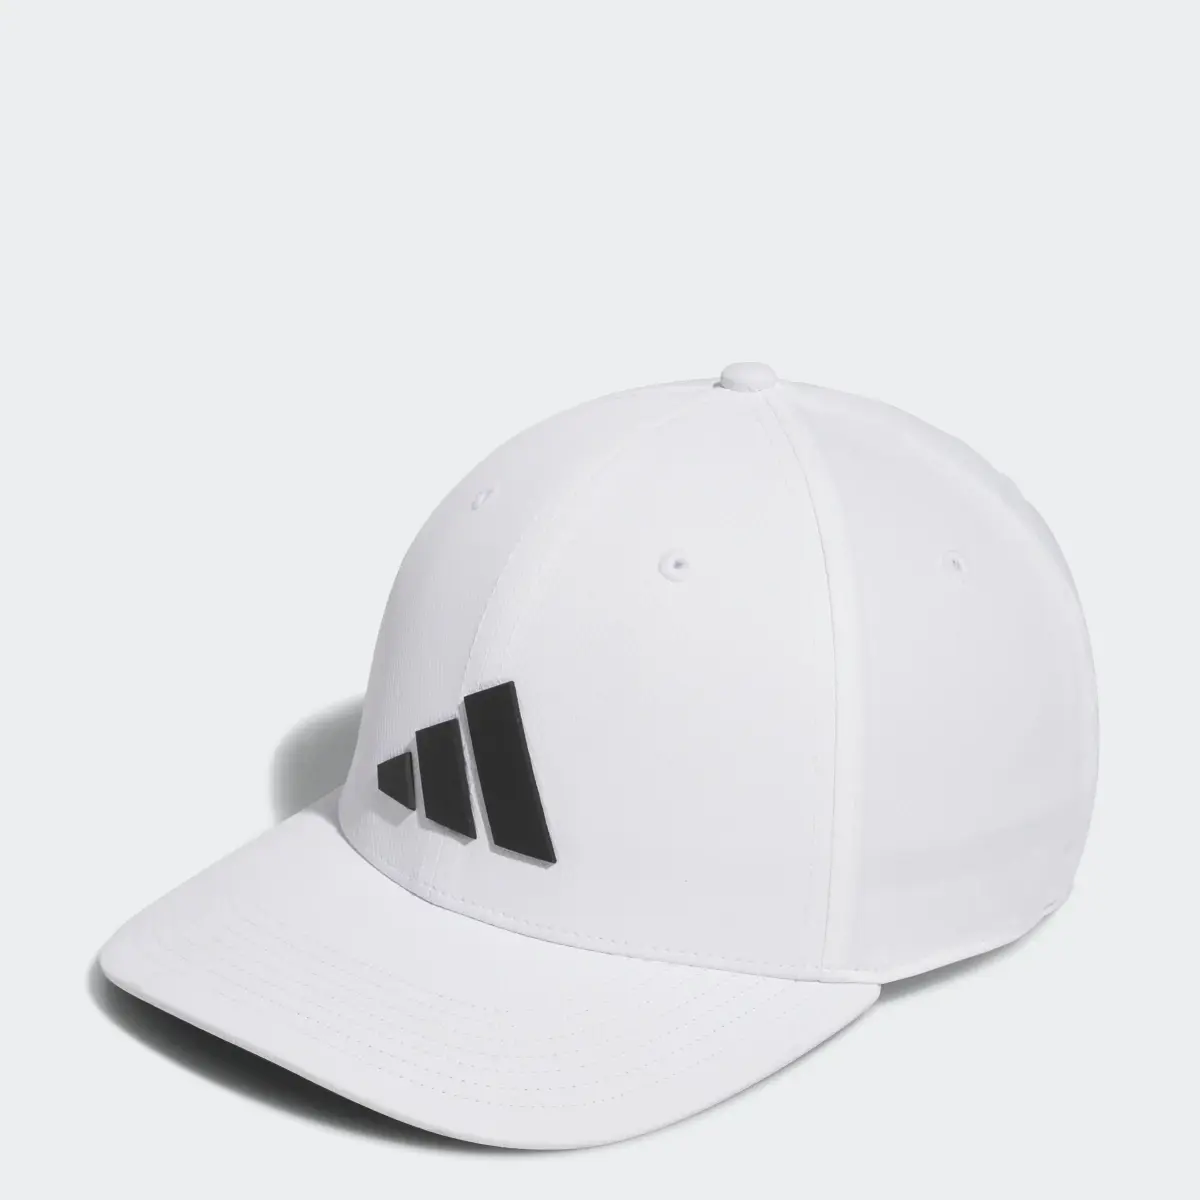 Adidas Tour Snapback Golf Hat. 1